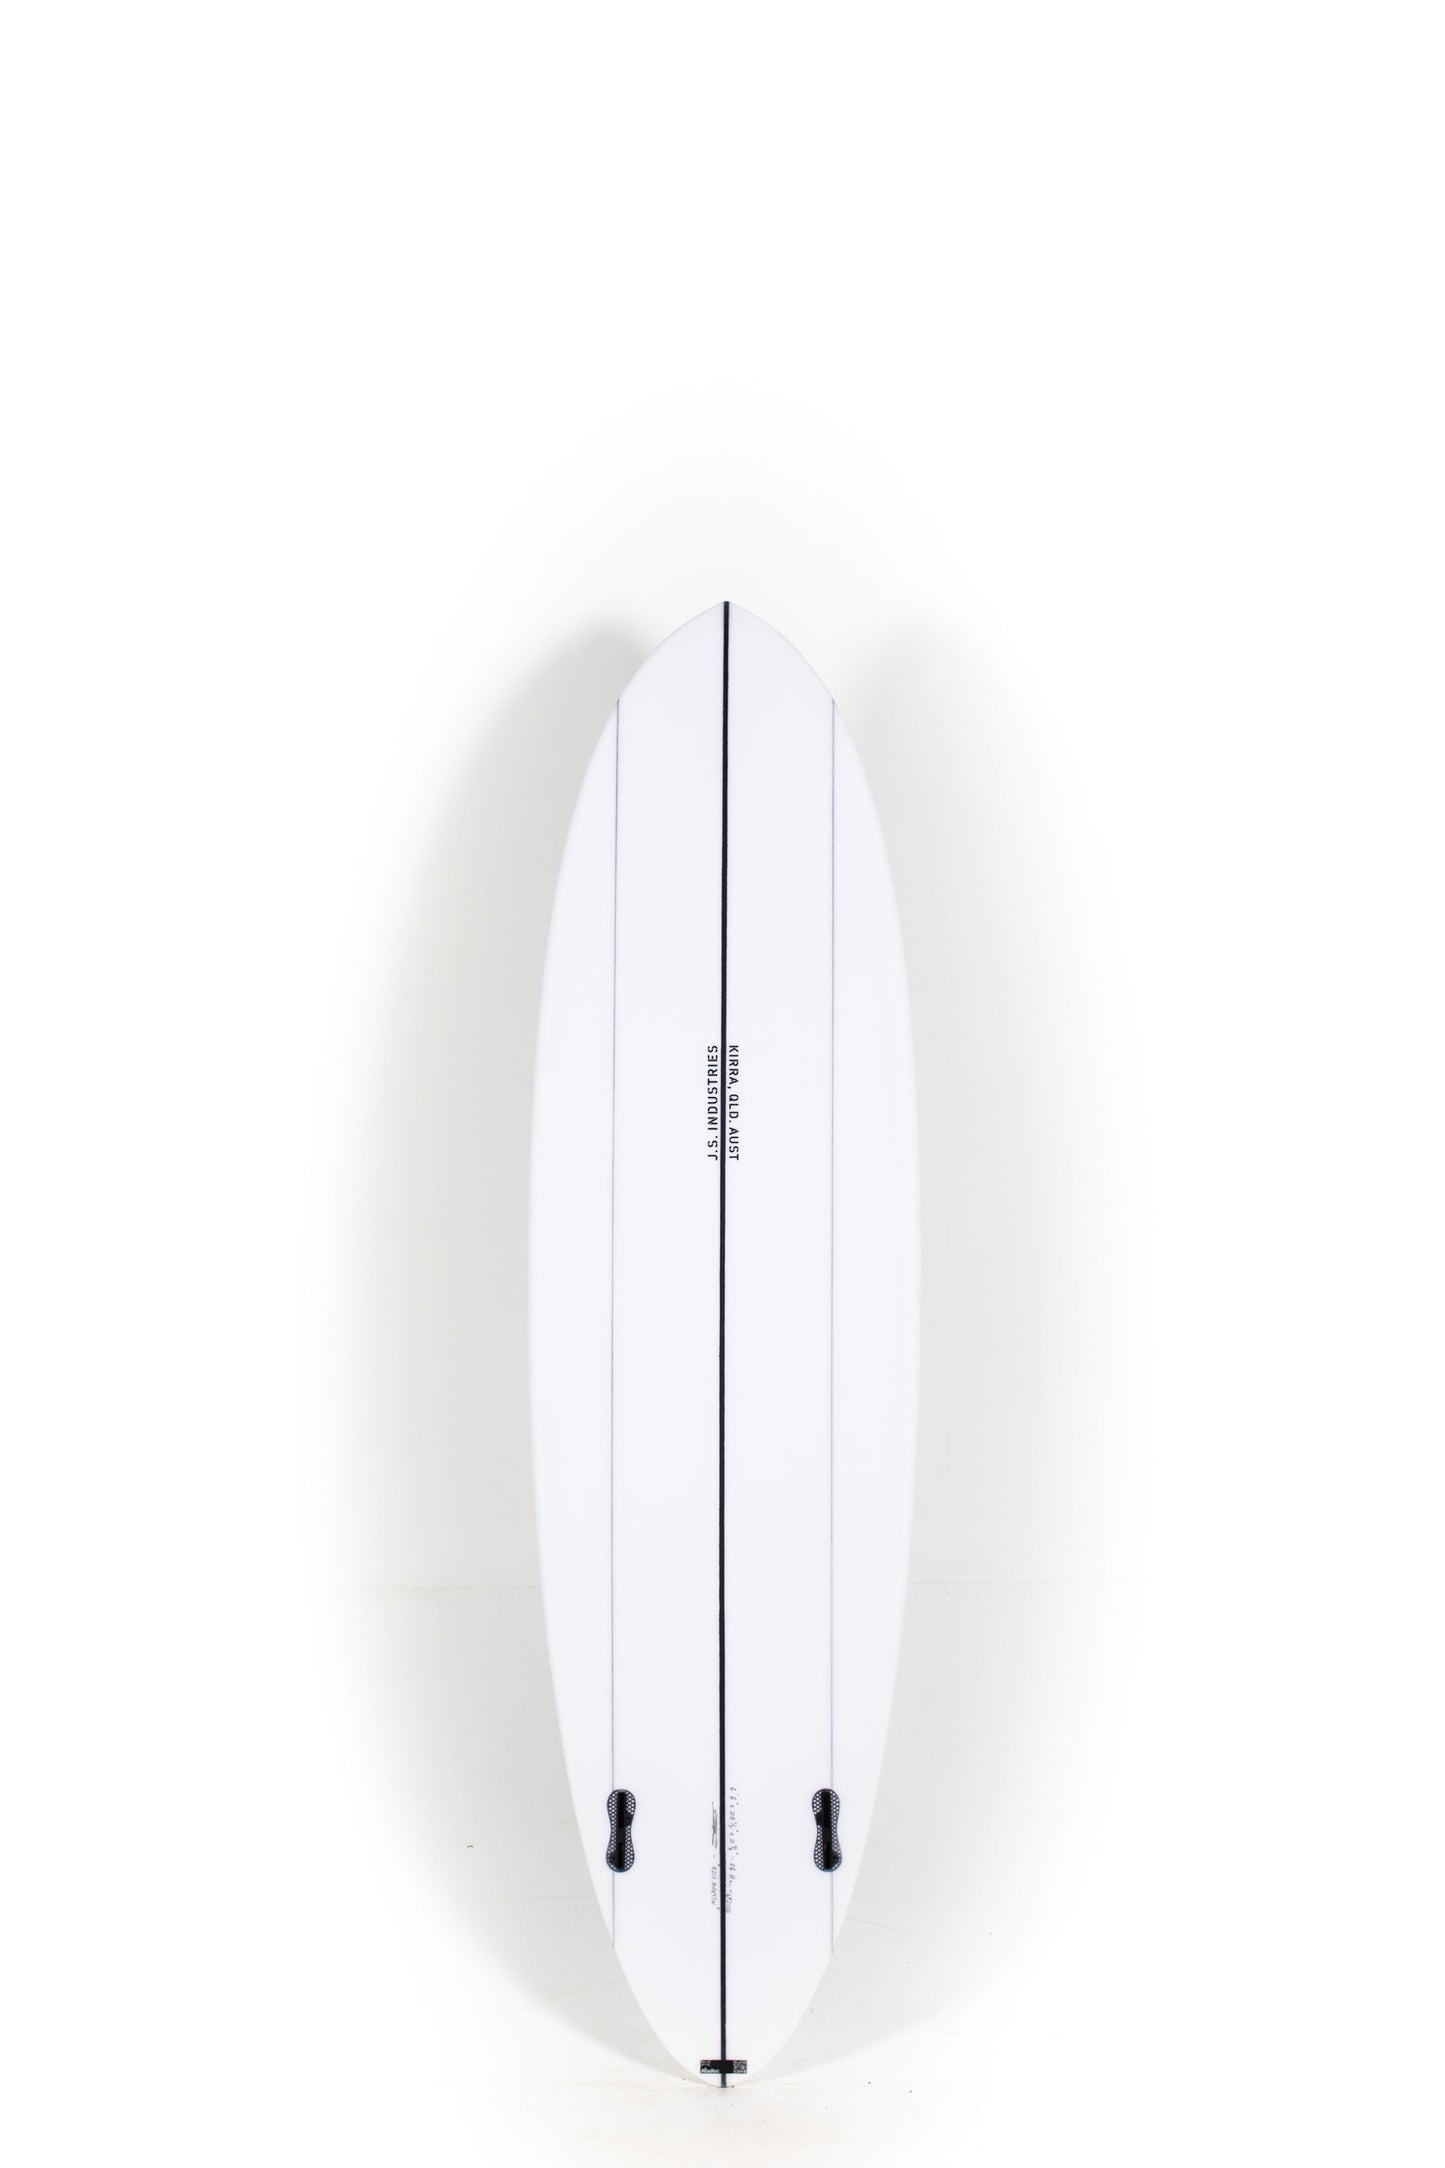 Pukas Surf shop - JS Surfboards - BIG BARON - 6'6" x 20,25 x 2,6 x 36,8L. - BIGBARON606